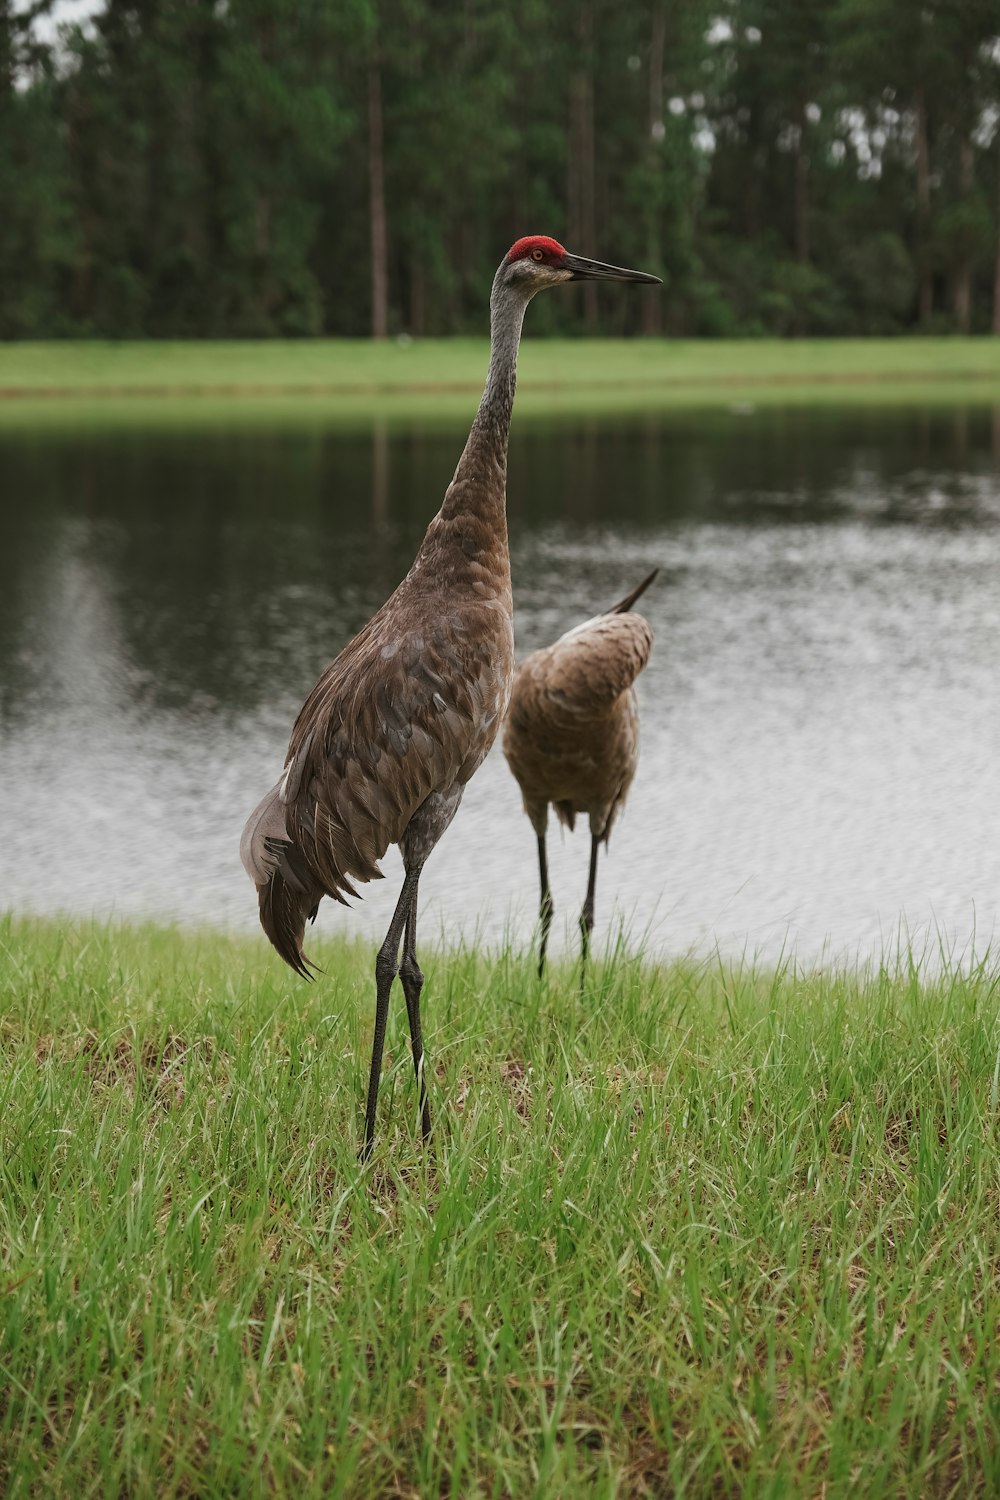 brown long beak bird on green grass field near body of water during daytime